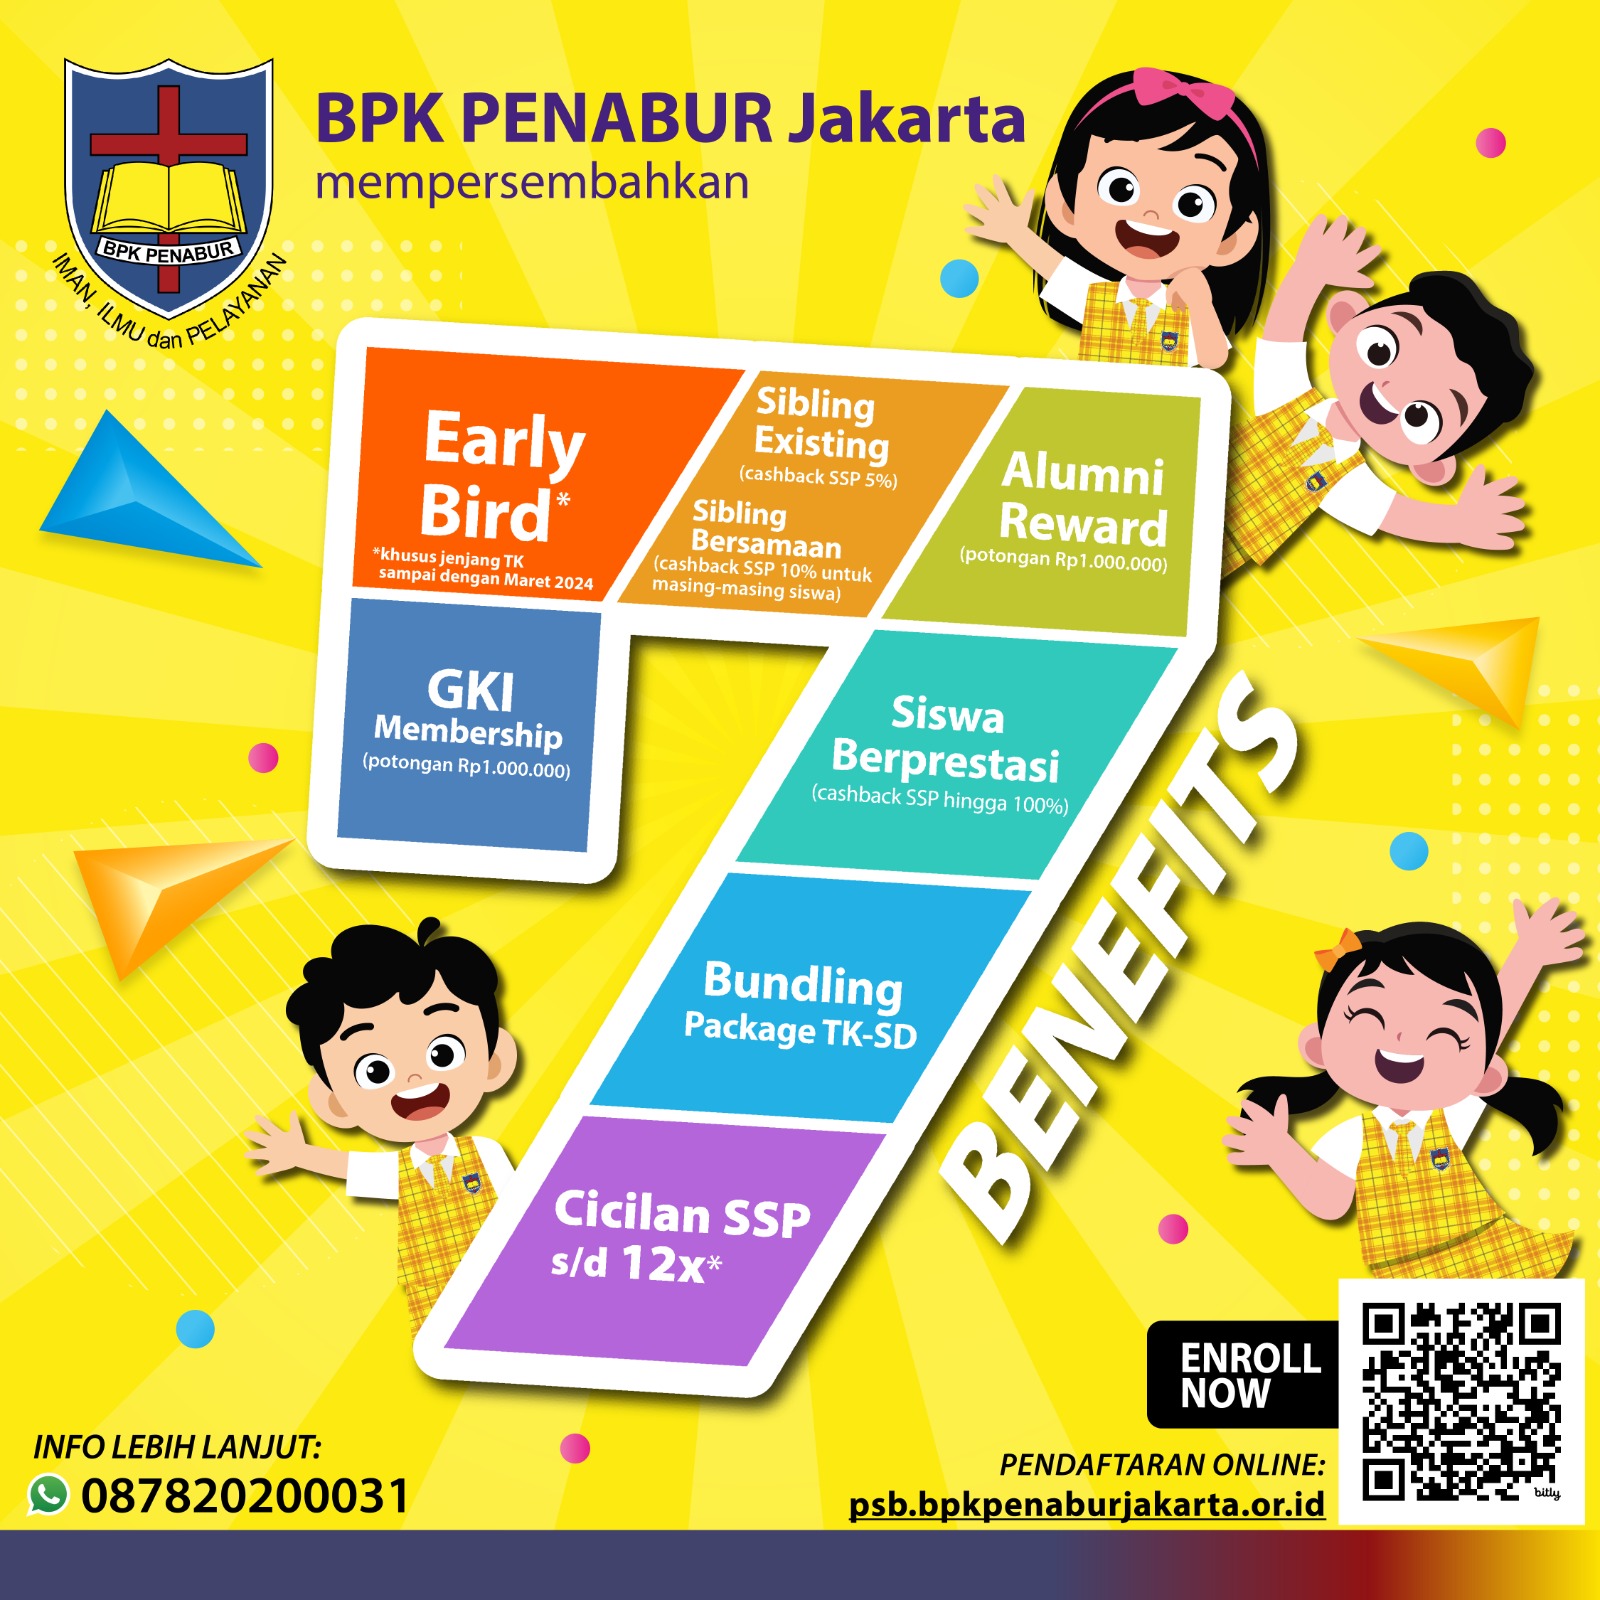 Materi E Flyer 7 Benefits TKK PENABUR Jakarta